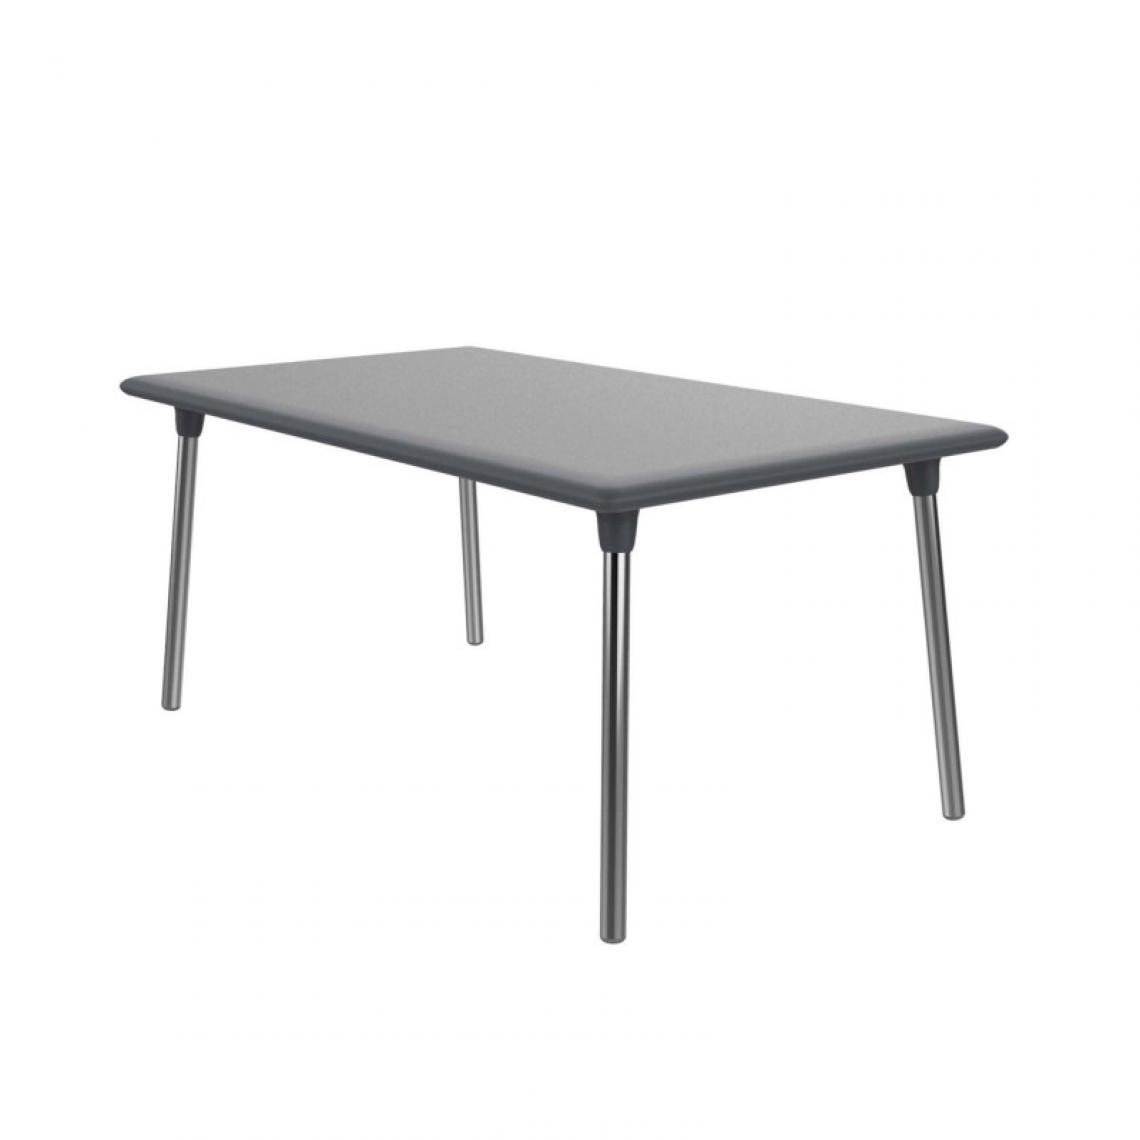 Resol - Table New Flash 160x90 - RESOL - Gris Foncépolypropylène, aluminium anodisé - Tables à manger